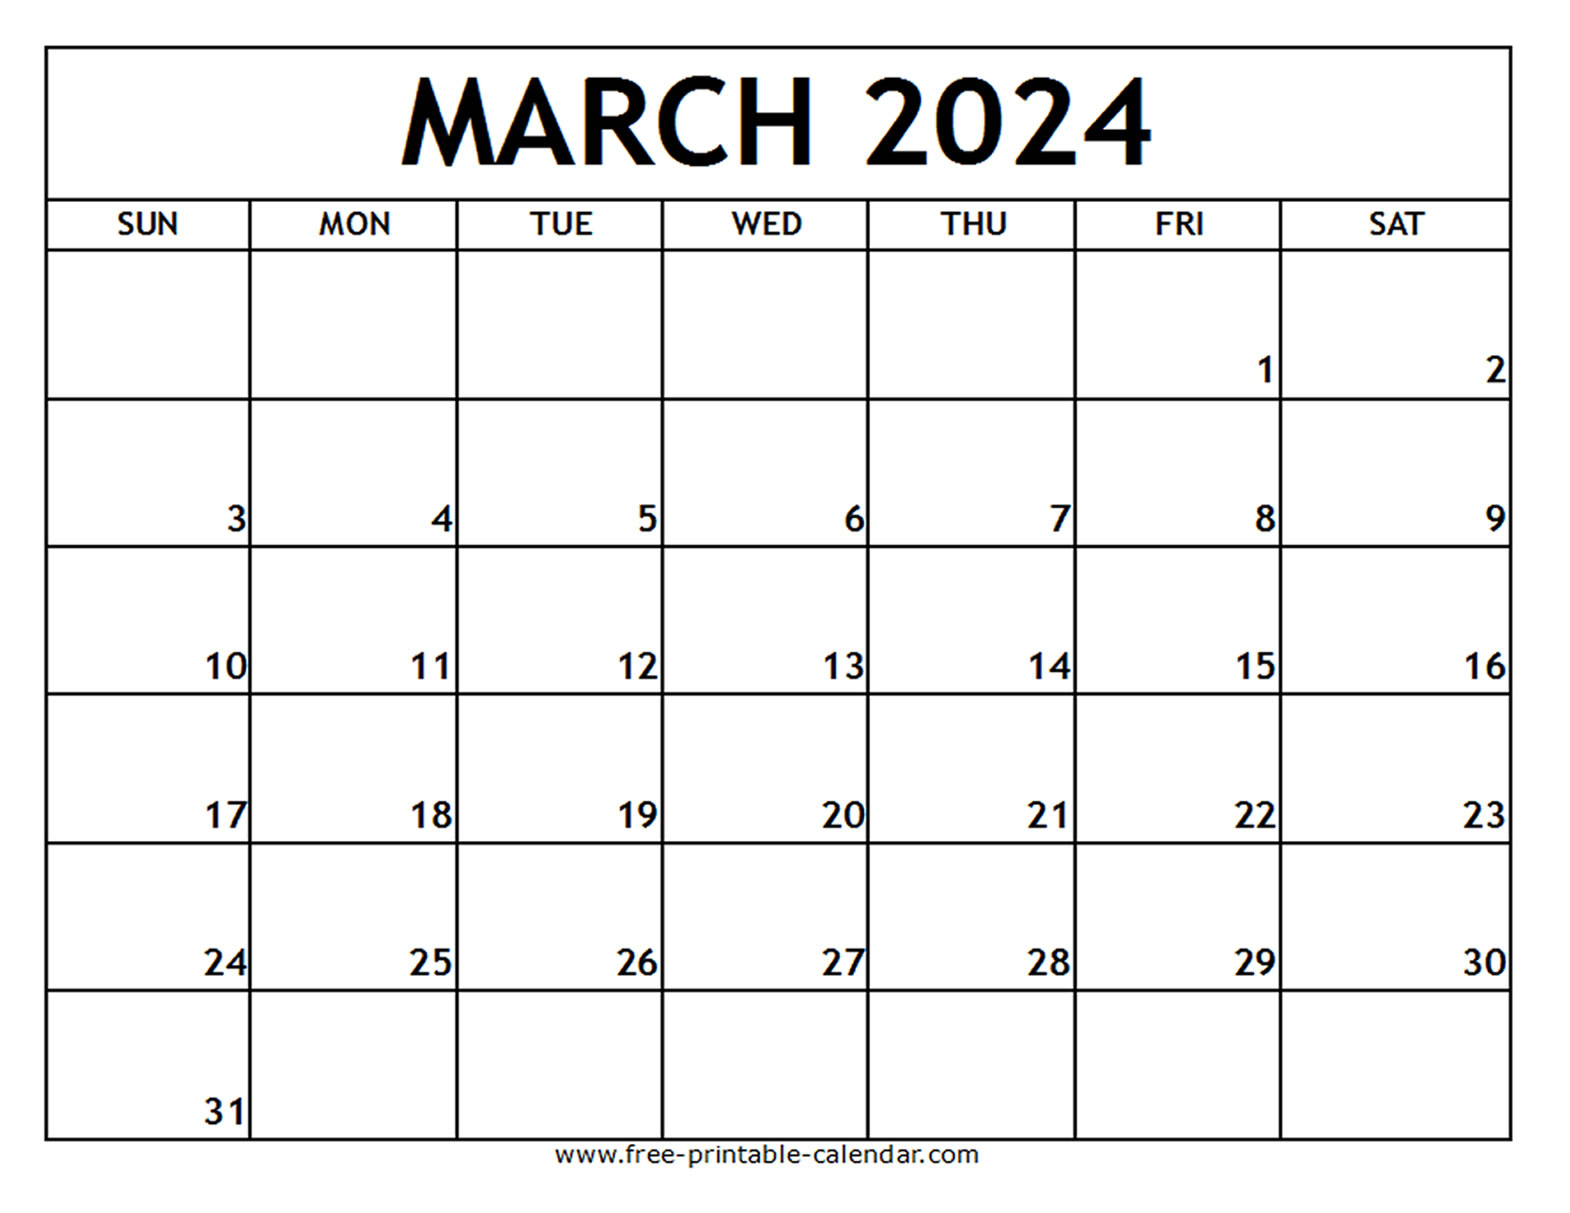 March 2024 Printable Calendar - Free-Printable-Calendar | Printable Calender 2024